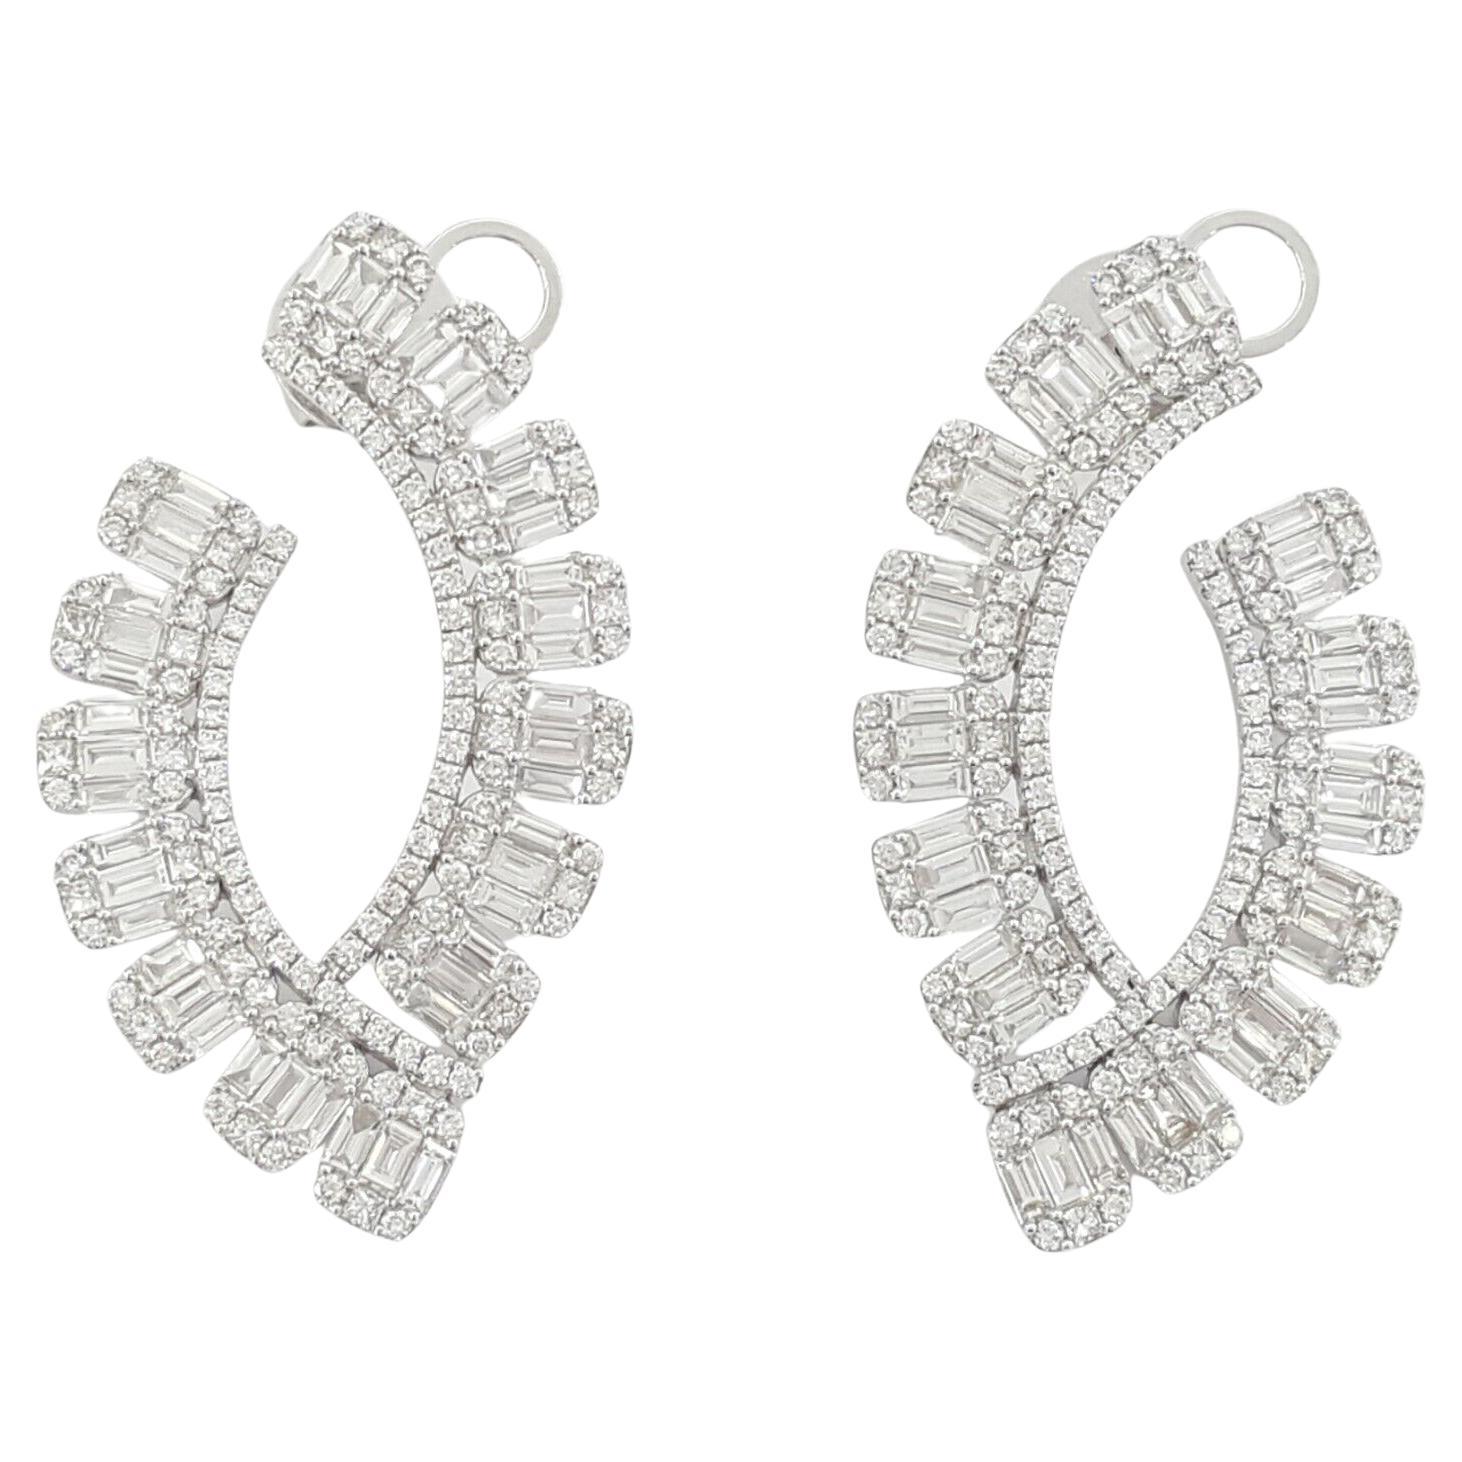 5 Carat White Diamonds Hoop Earrings